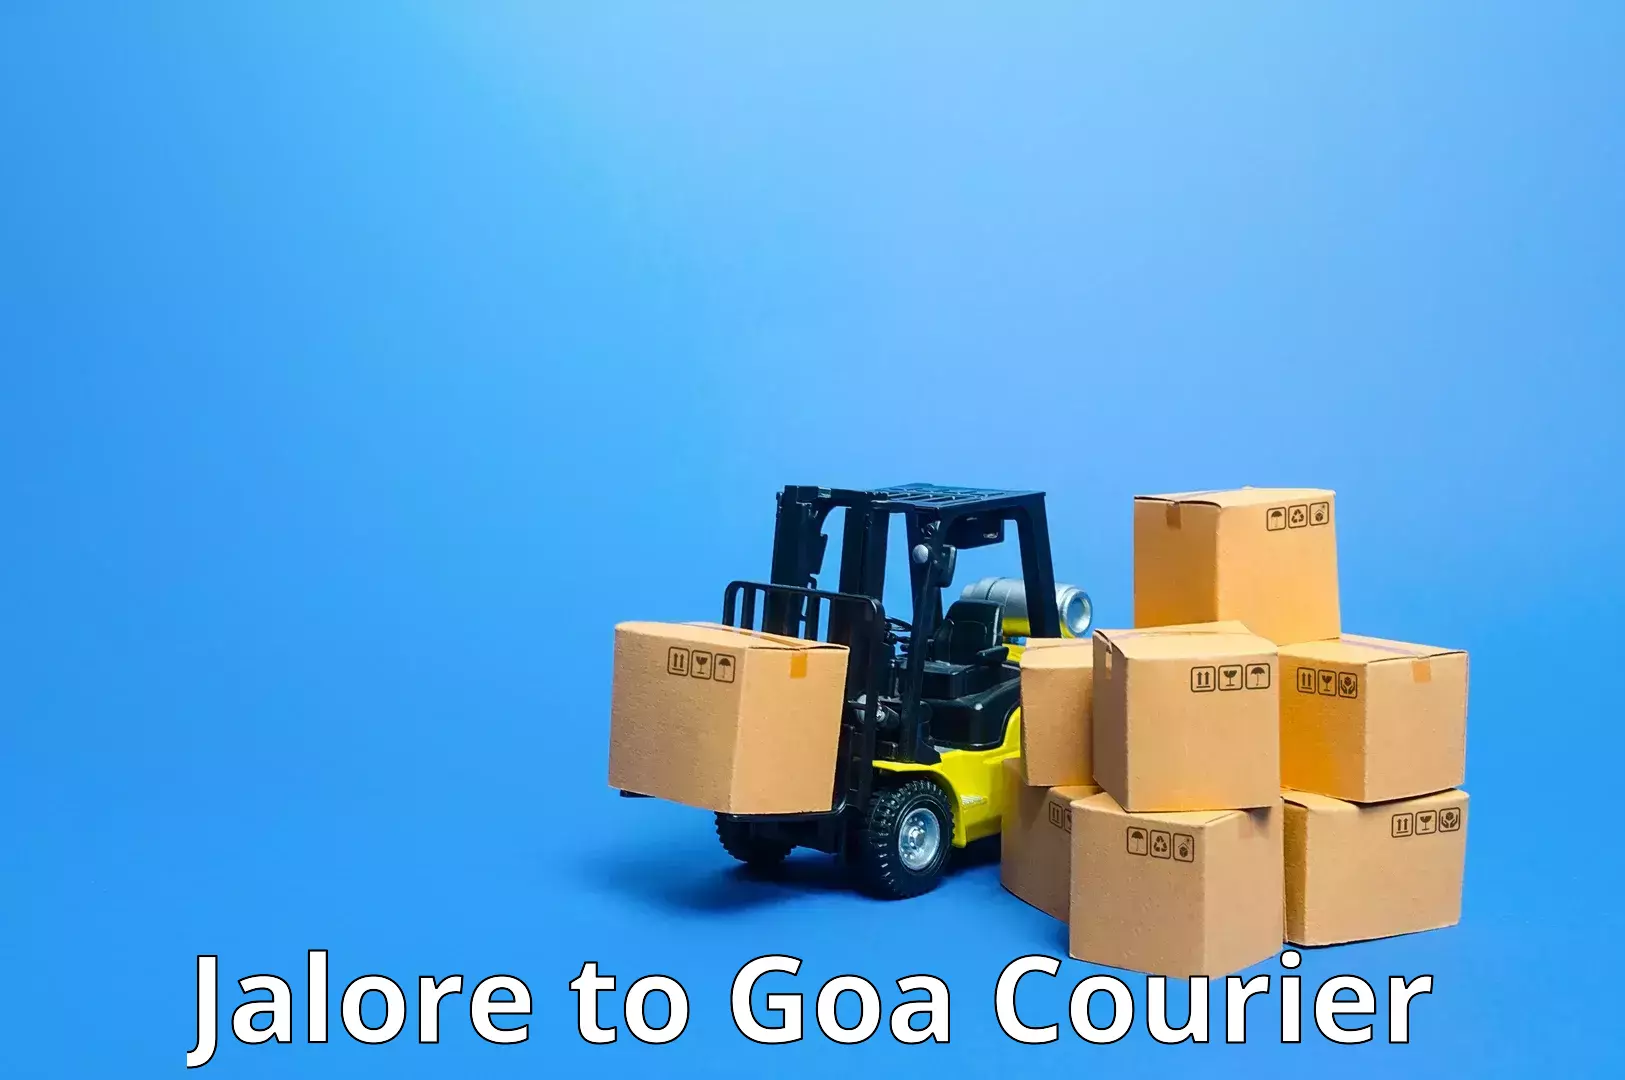 Delivery service partnership Jalore to Goa